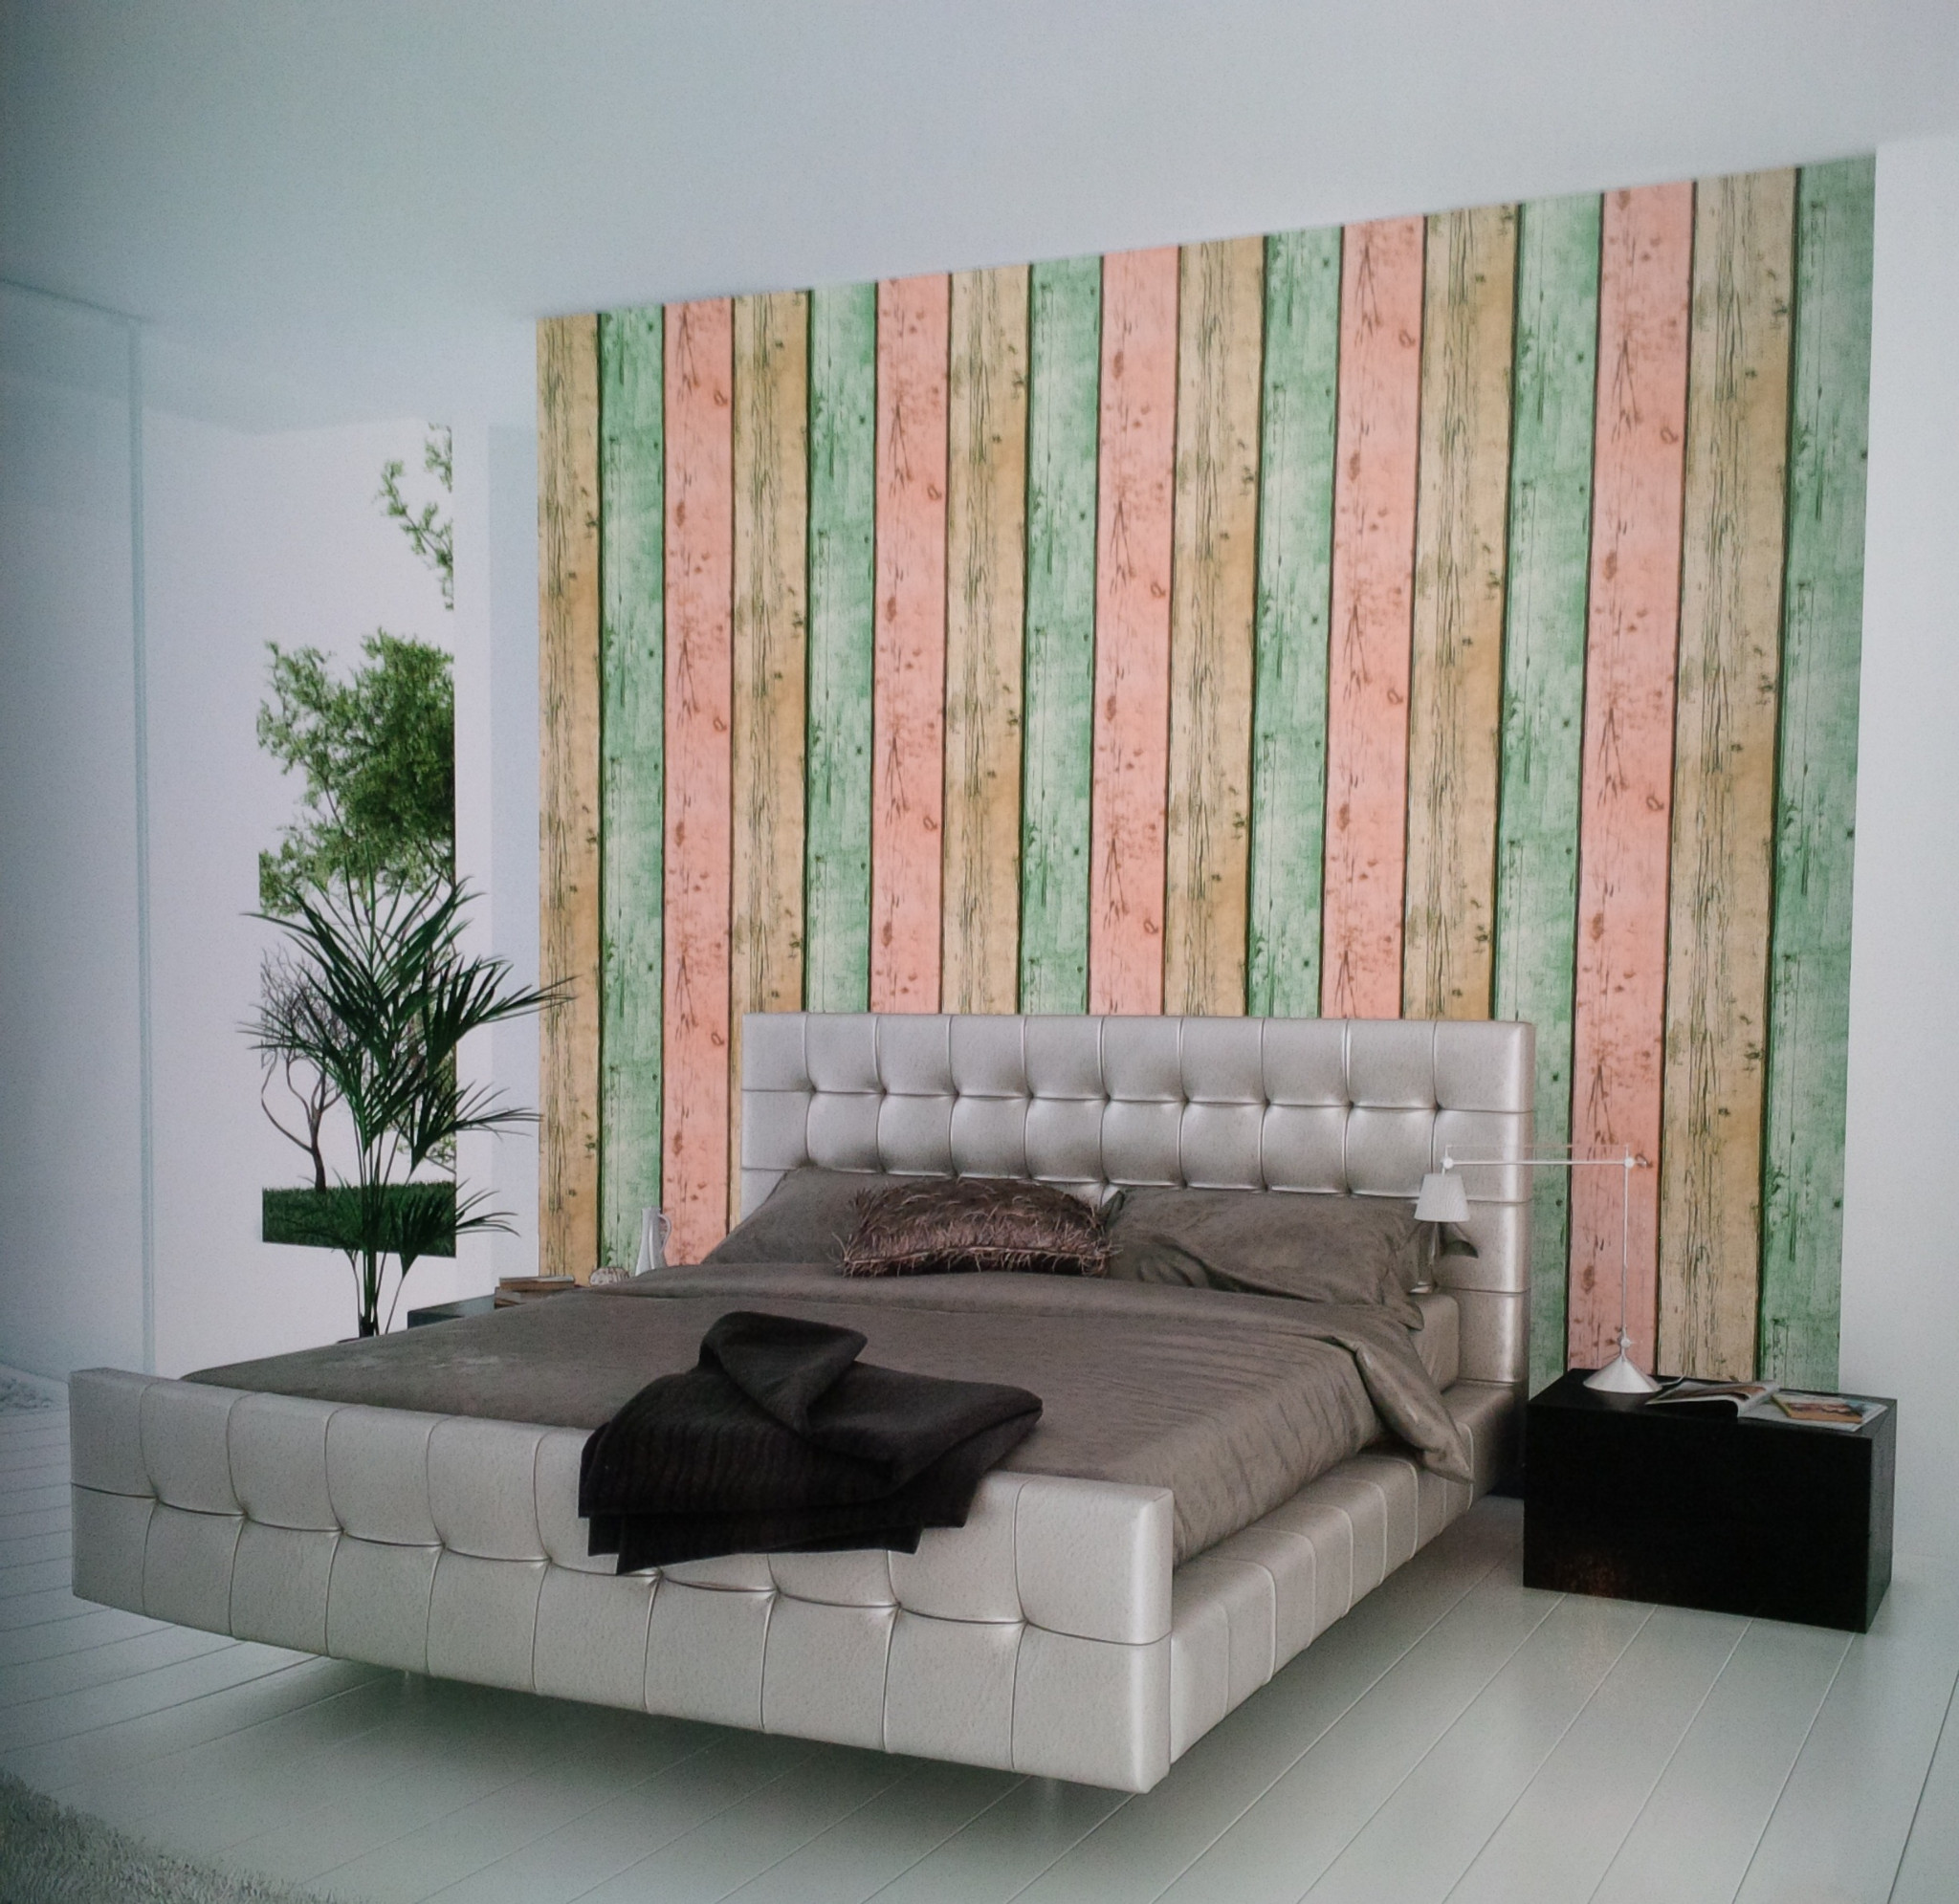 wallpaper dinding motif kayu,furniture,room,wall,interior design,bed